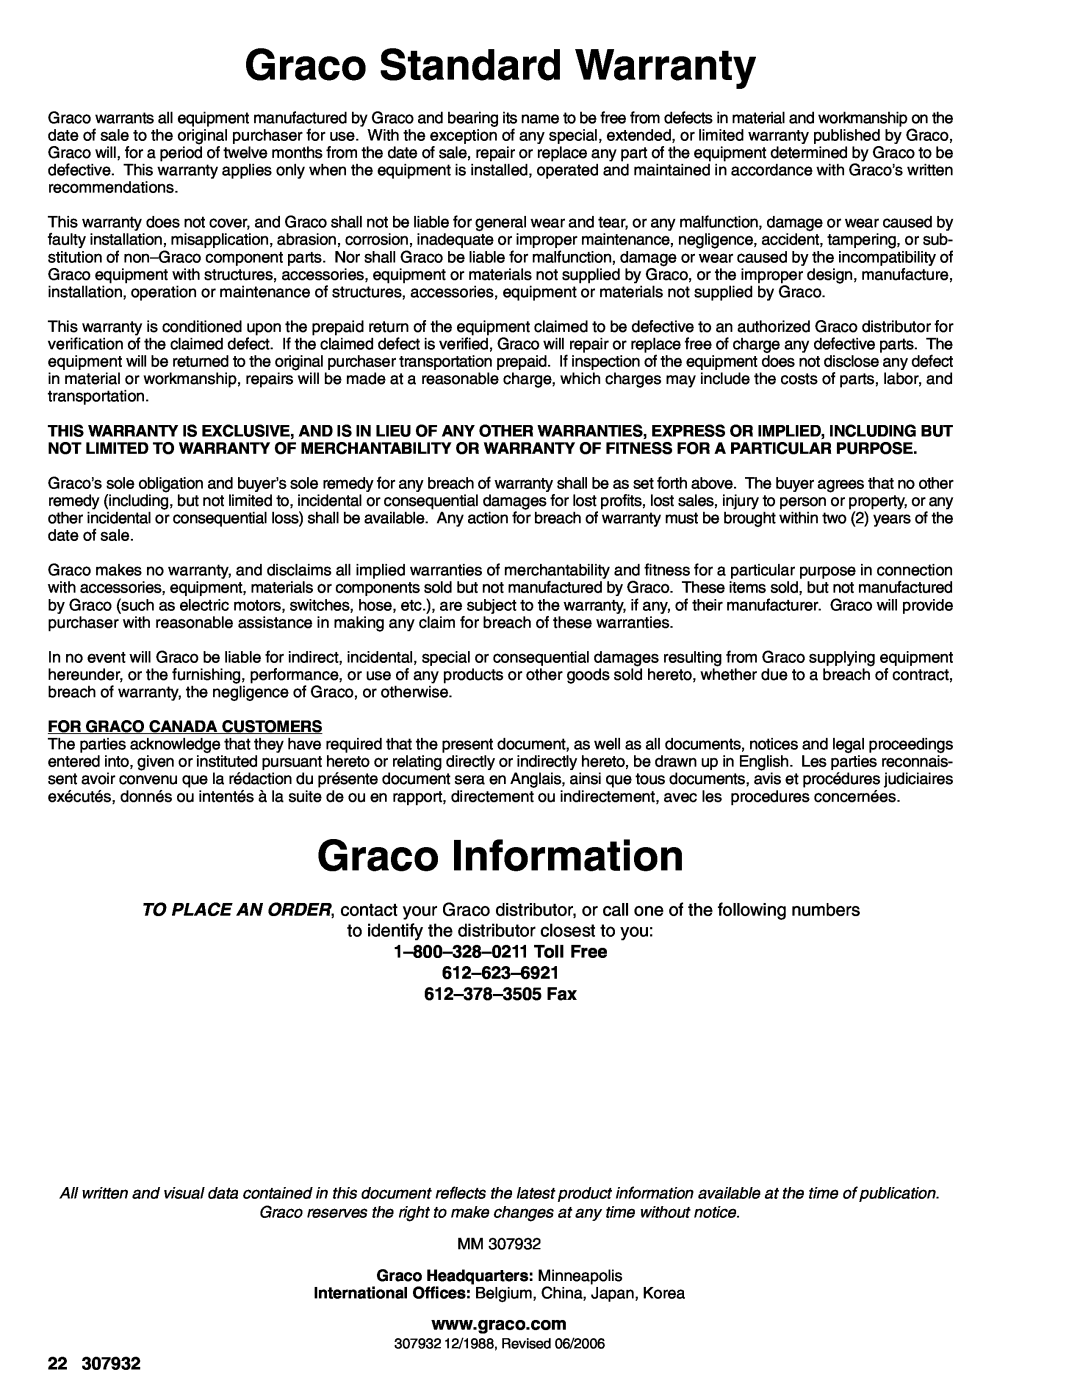 Graco 245186 Graco Standard Warranty, Graco Information, For Graco Canada Customers, Graco Headquarters Minneapolis 